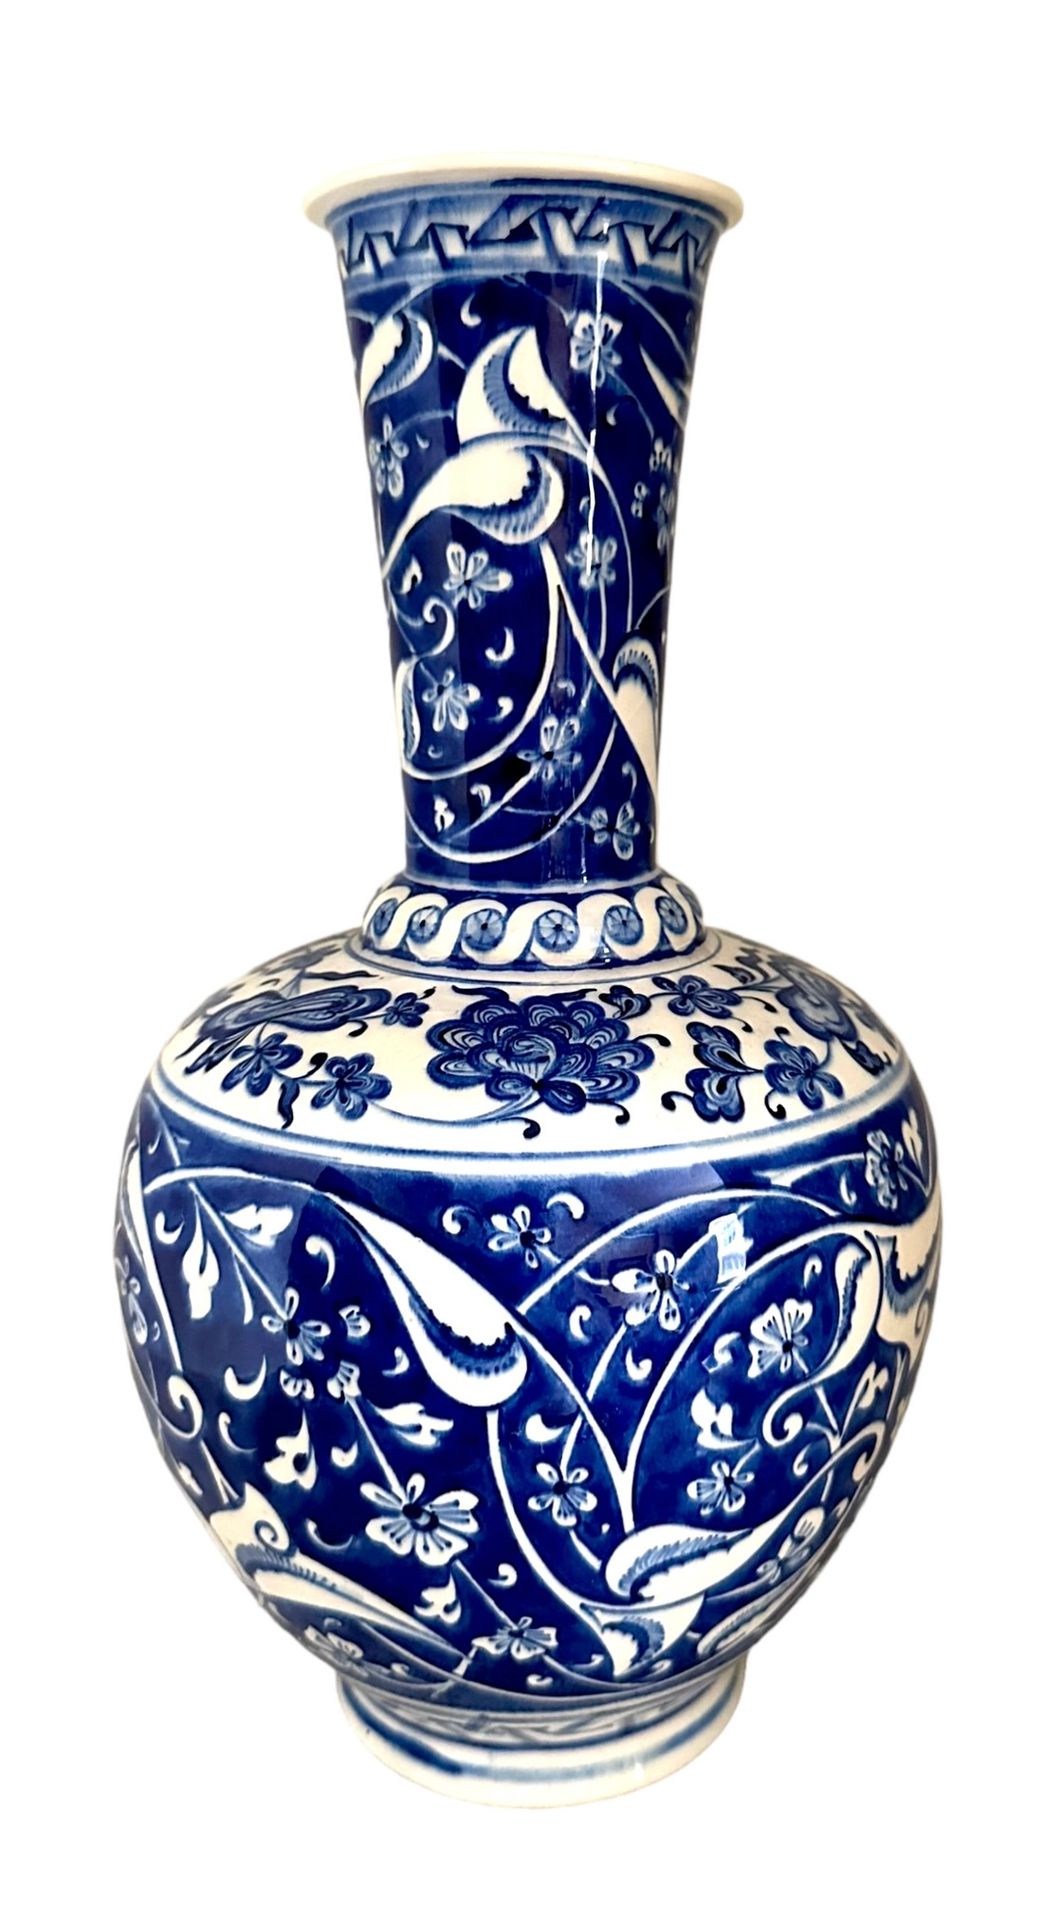 Adil Var Signed Ceramic Vase Blau-weiße Keramik mit Blumendekor, 2006 Iznik Nurs&hellip;